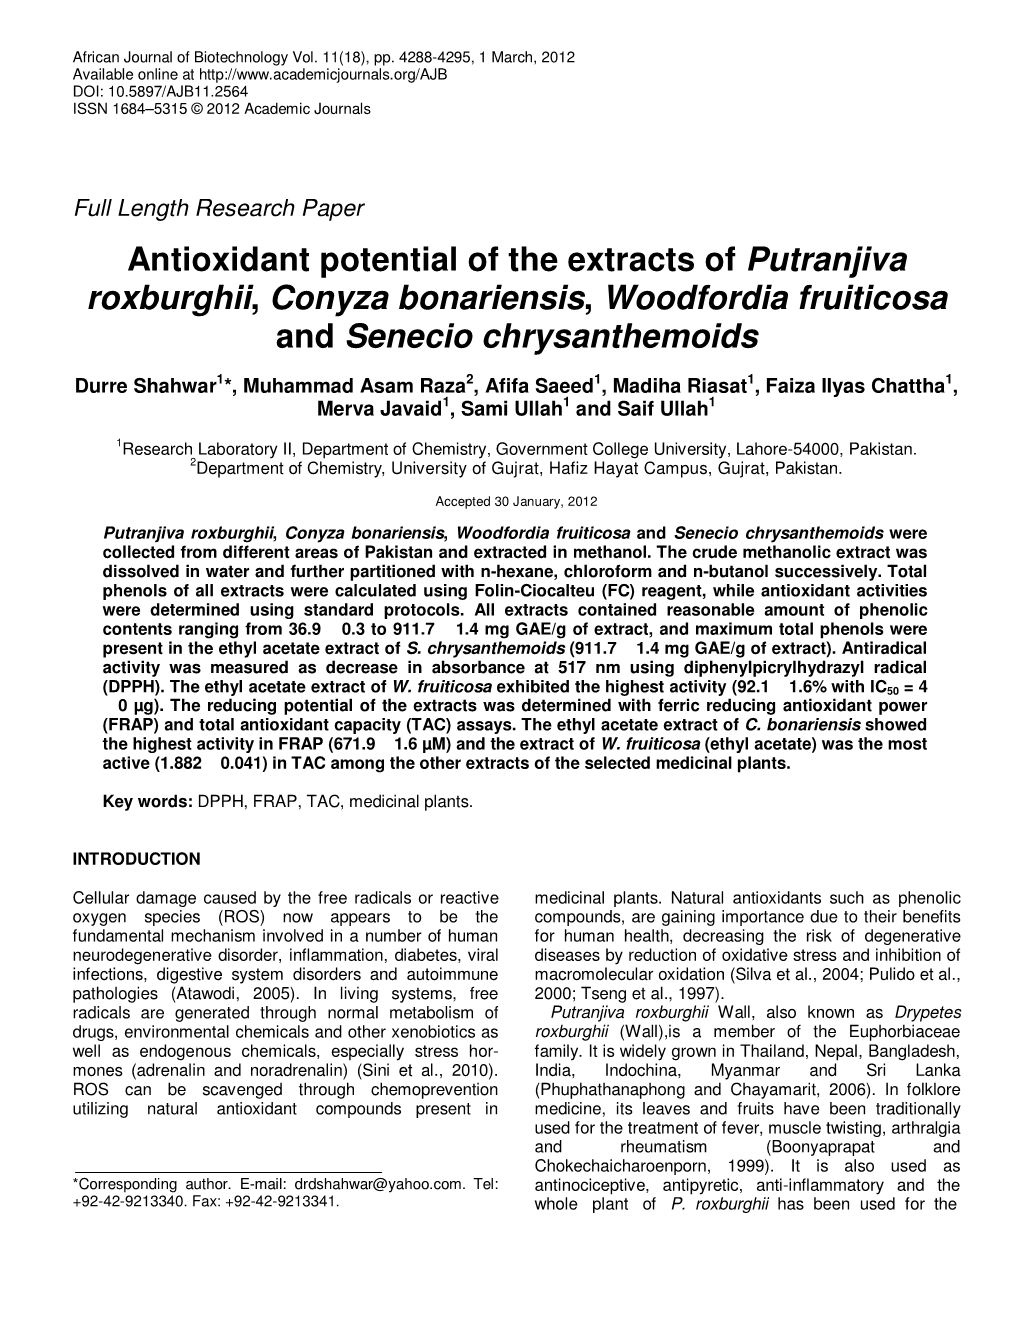 Antioxidant Potential of the Extracts of Putranjiva Roxburghii, Conyza